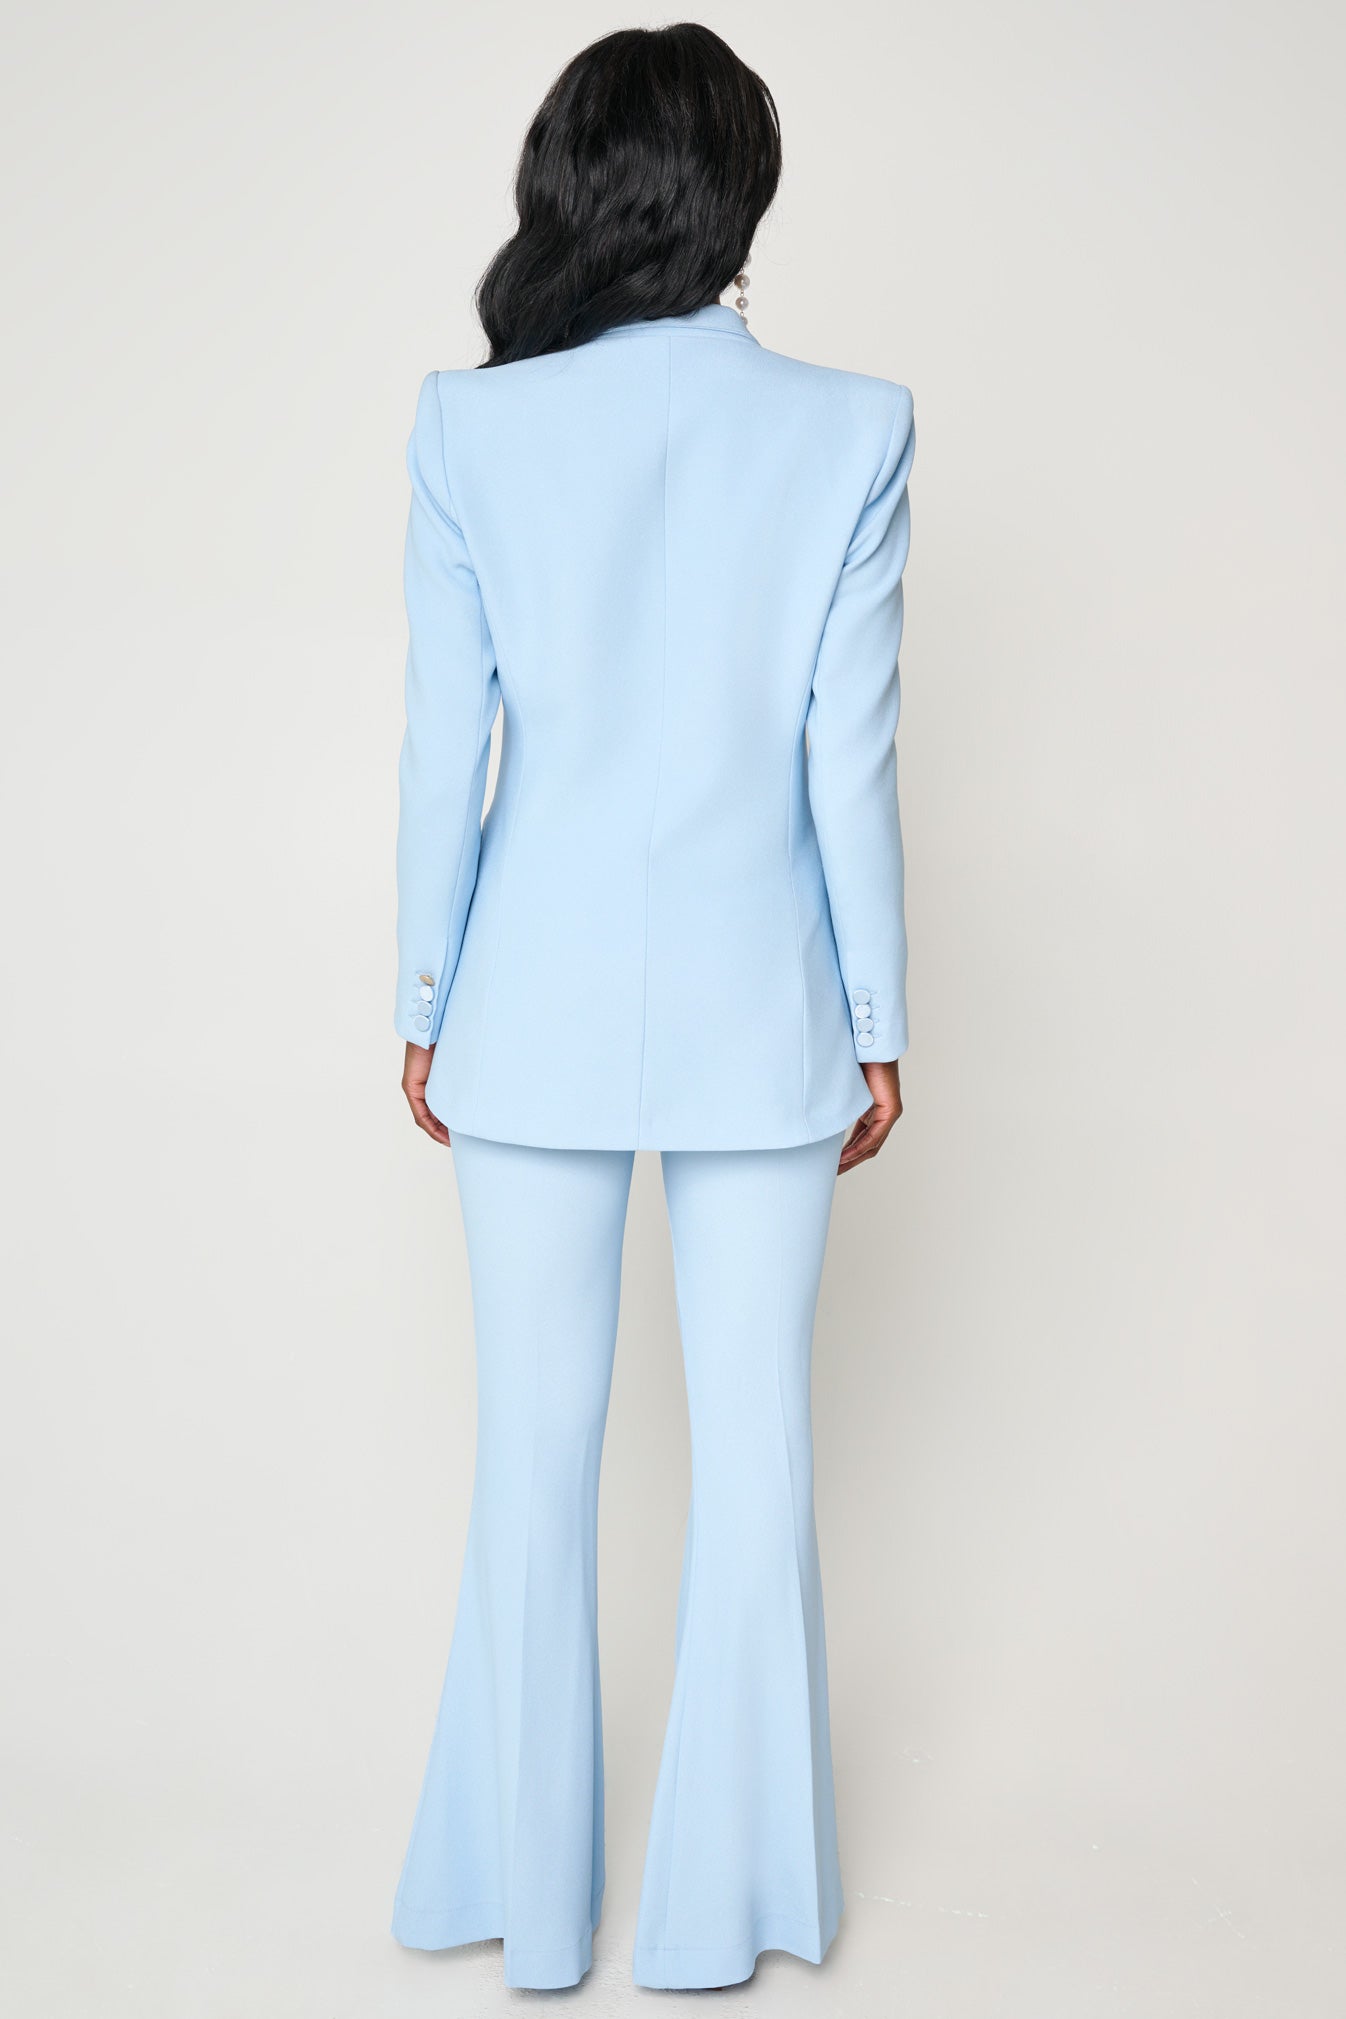 Bianca Suit in Light Blue by Hebe Studio - RENTAL